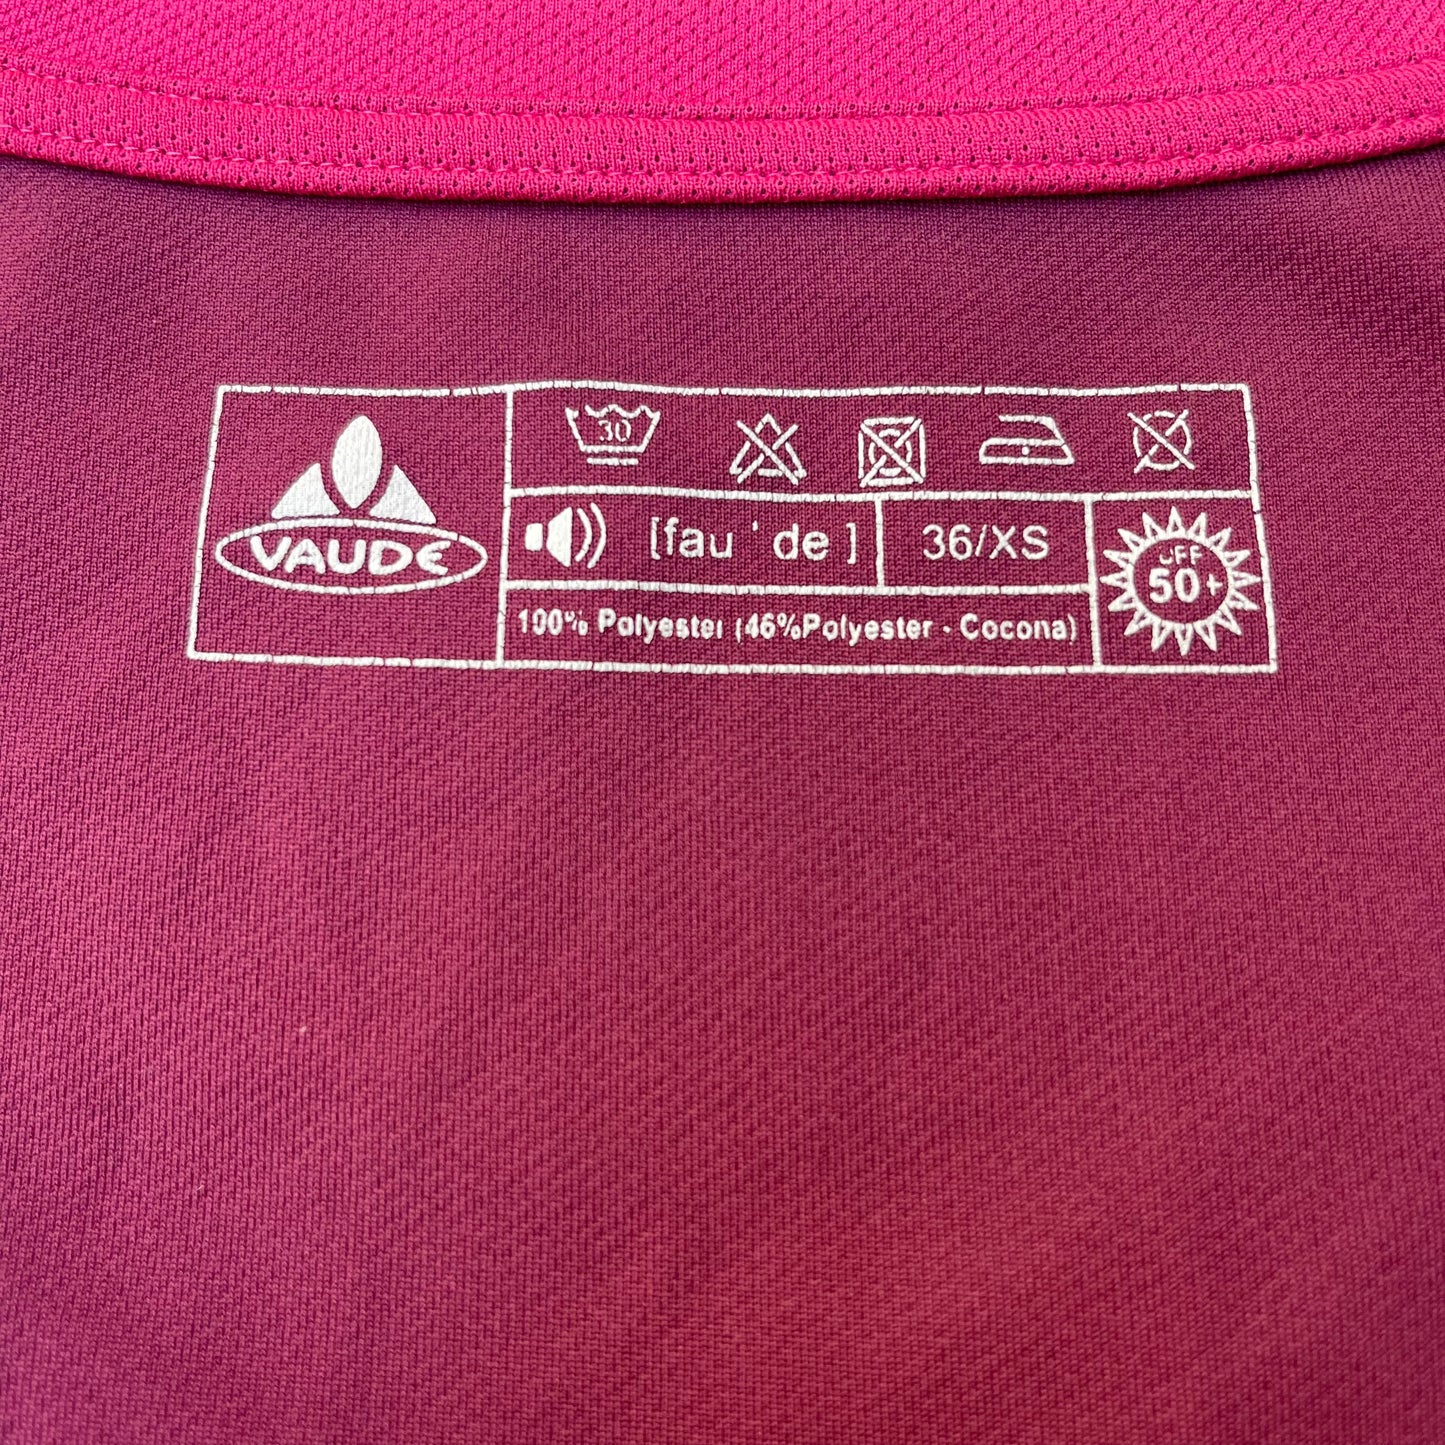 T-Shirt von Vaude Damen XS pink neu